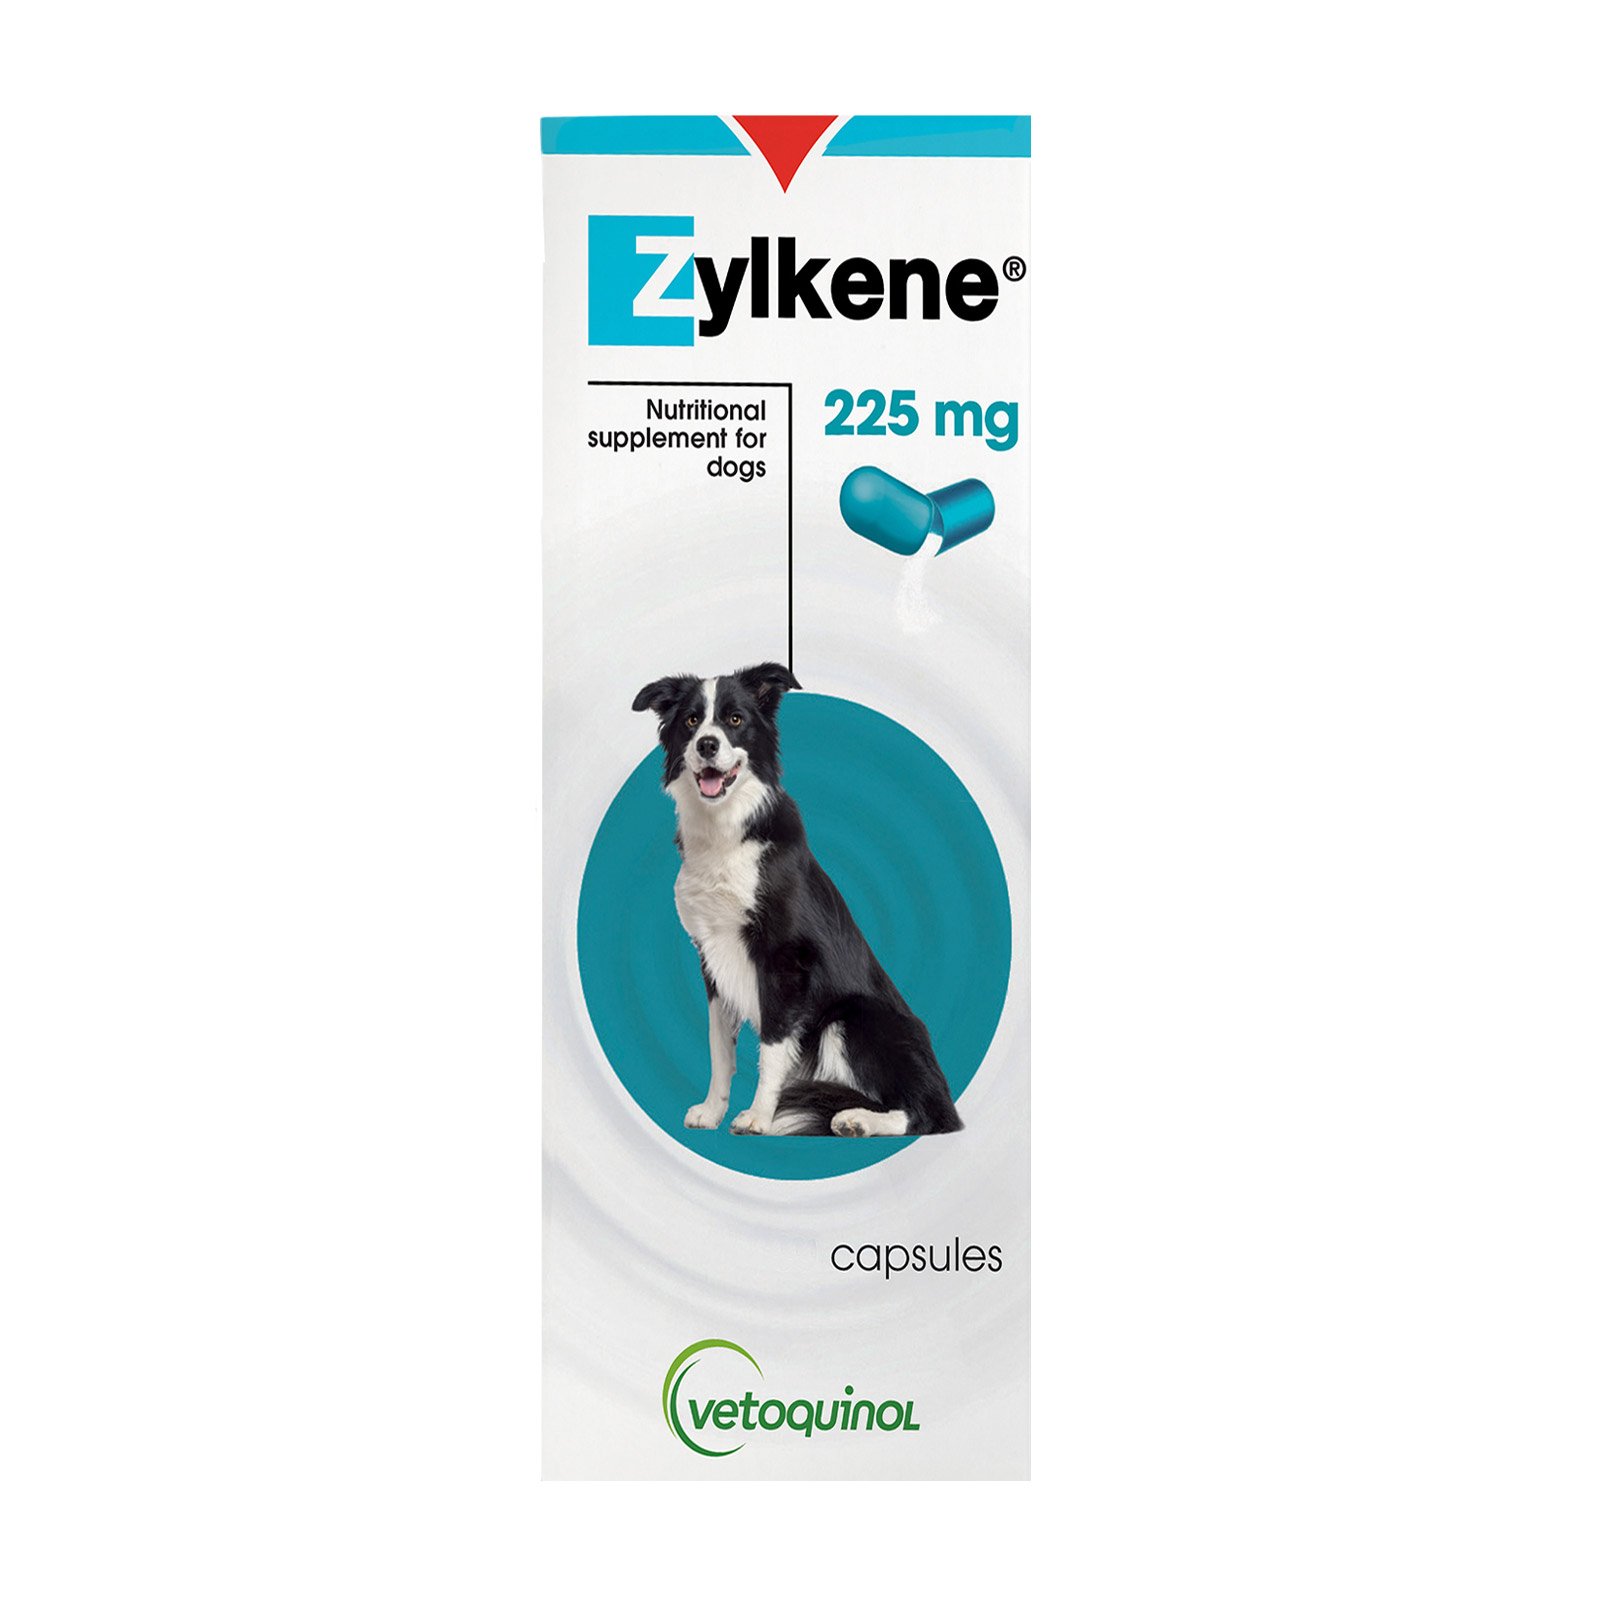 Zylkene Nutritional Supplement For Dogs 225 Mg